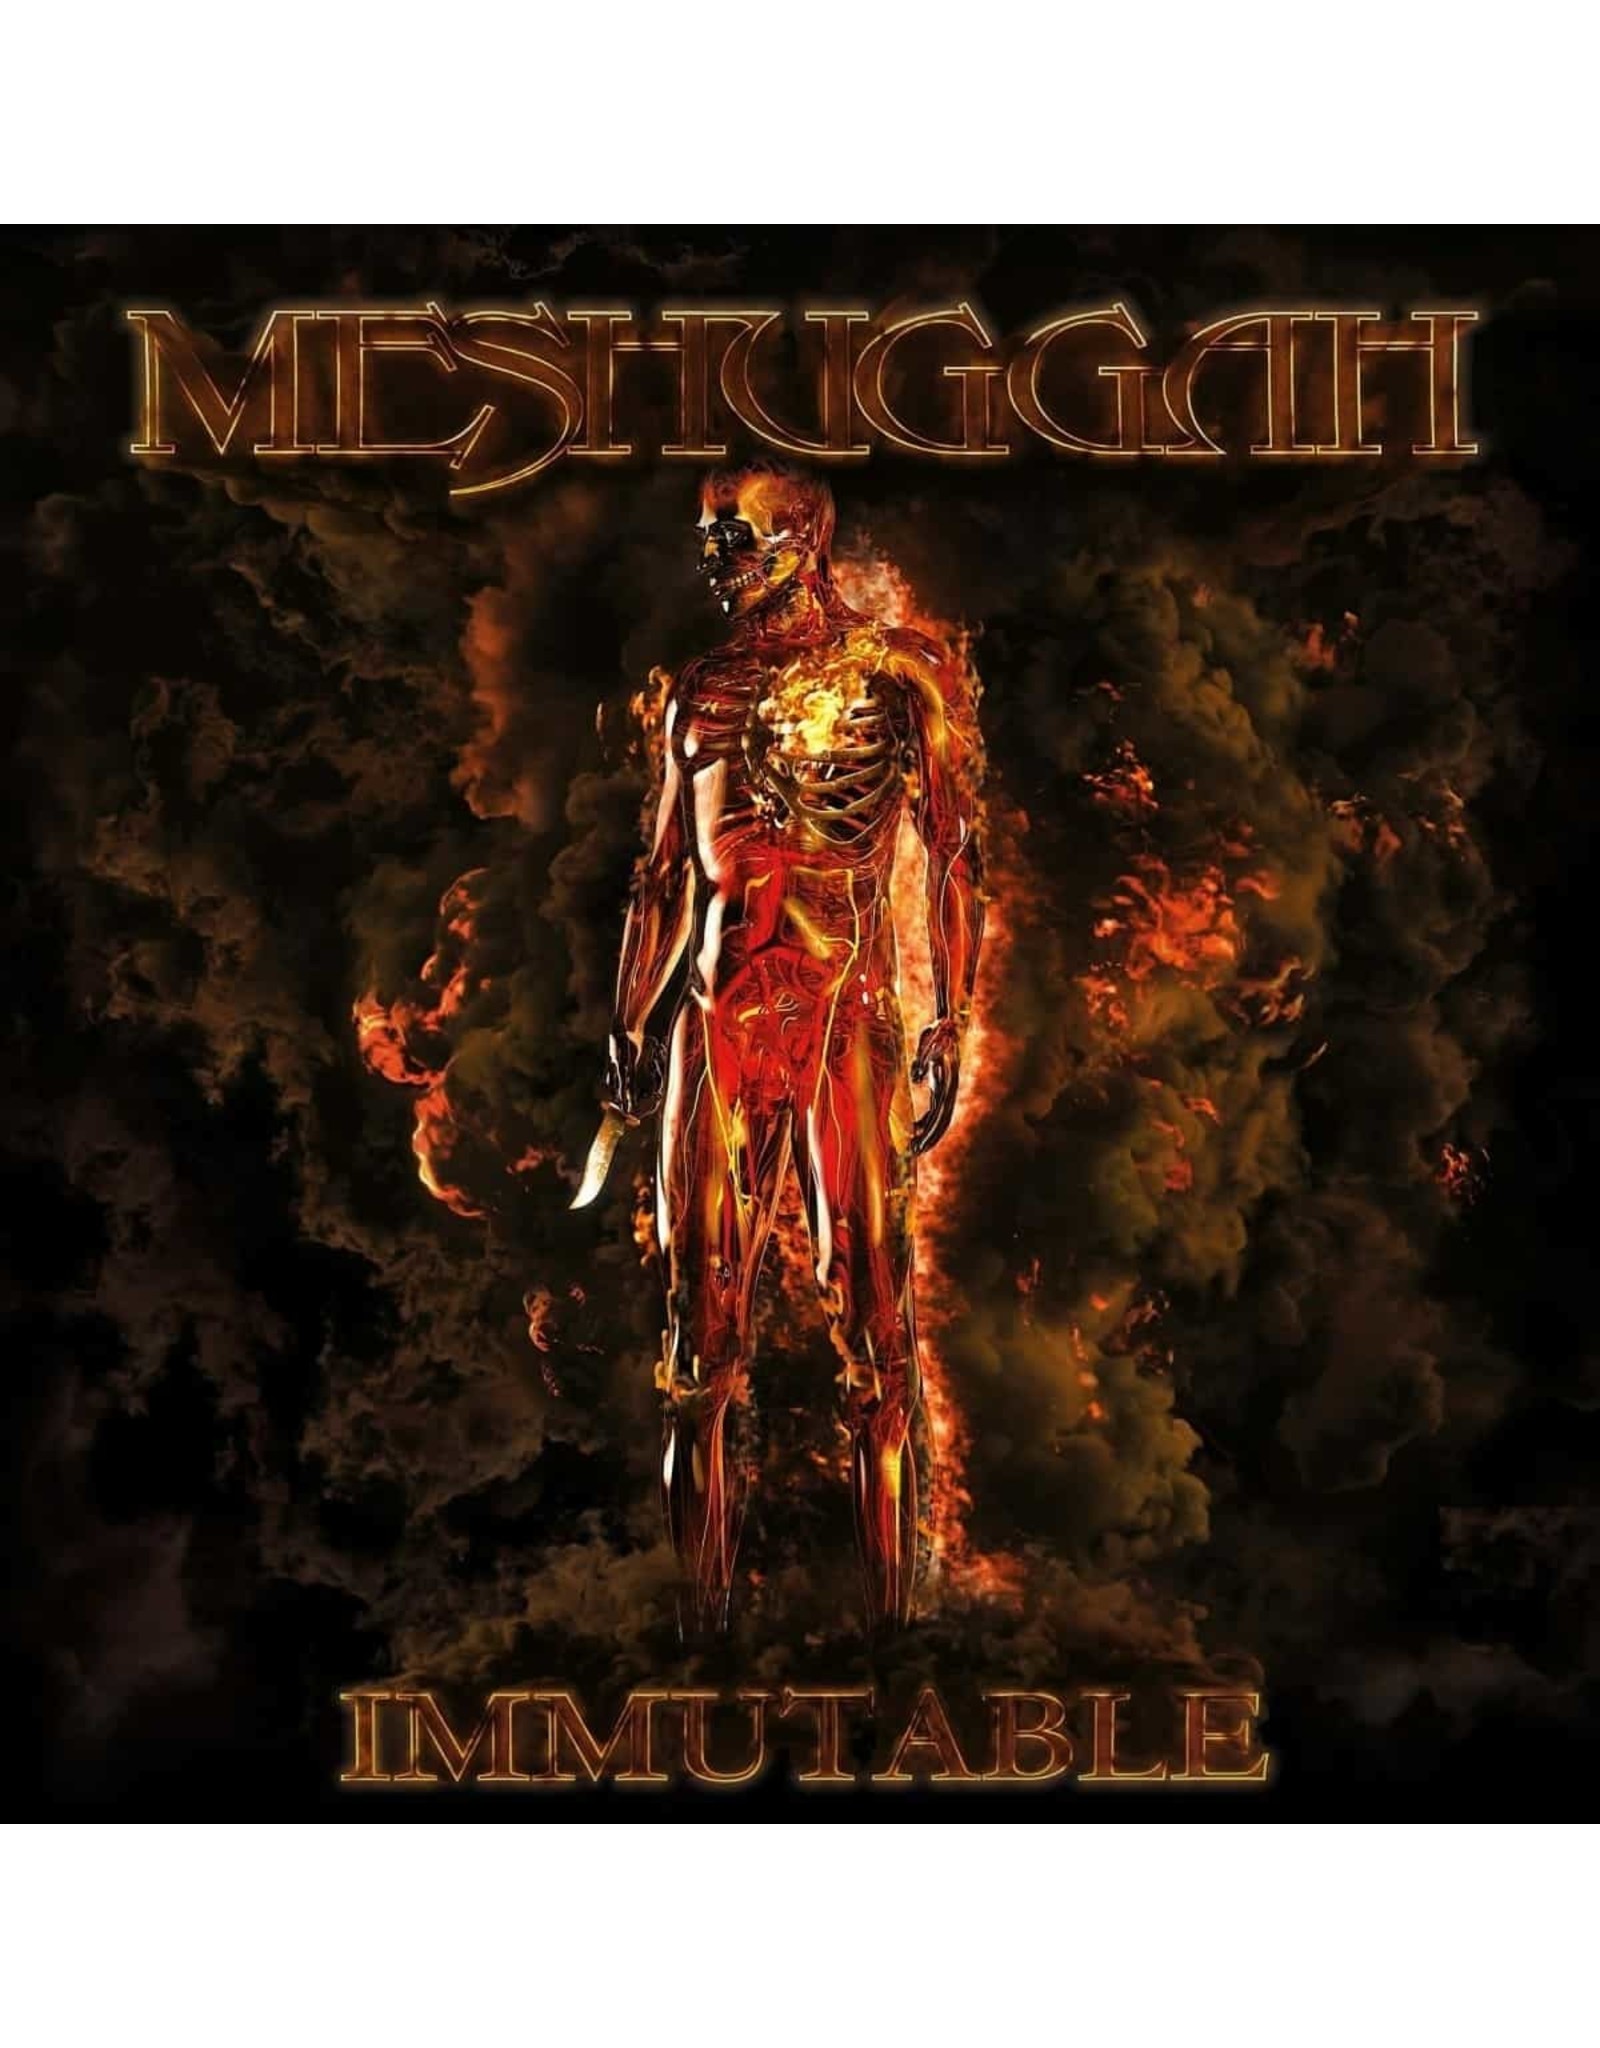 Meshuggah - Immutable 2LP (Limited Edition Red Transparent Vinyl)